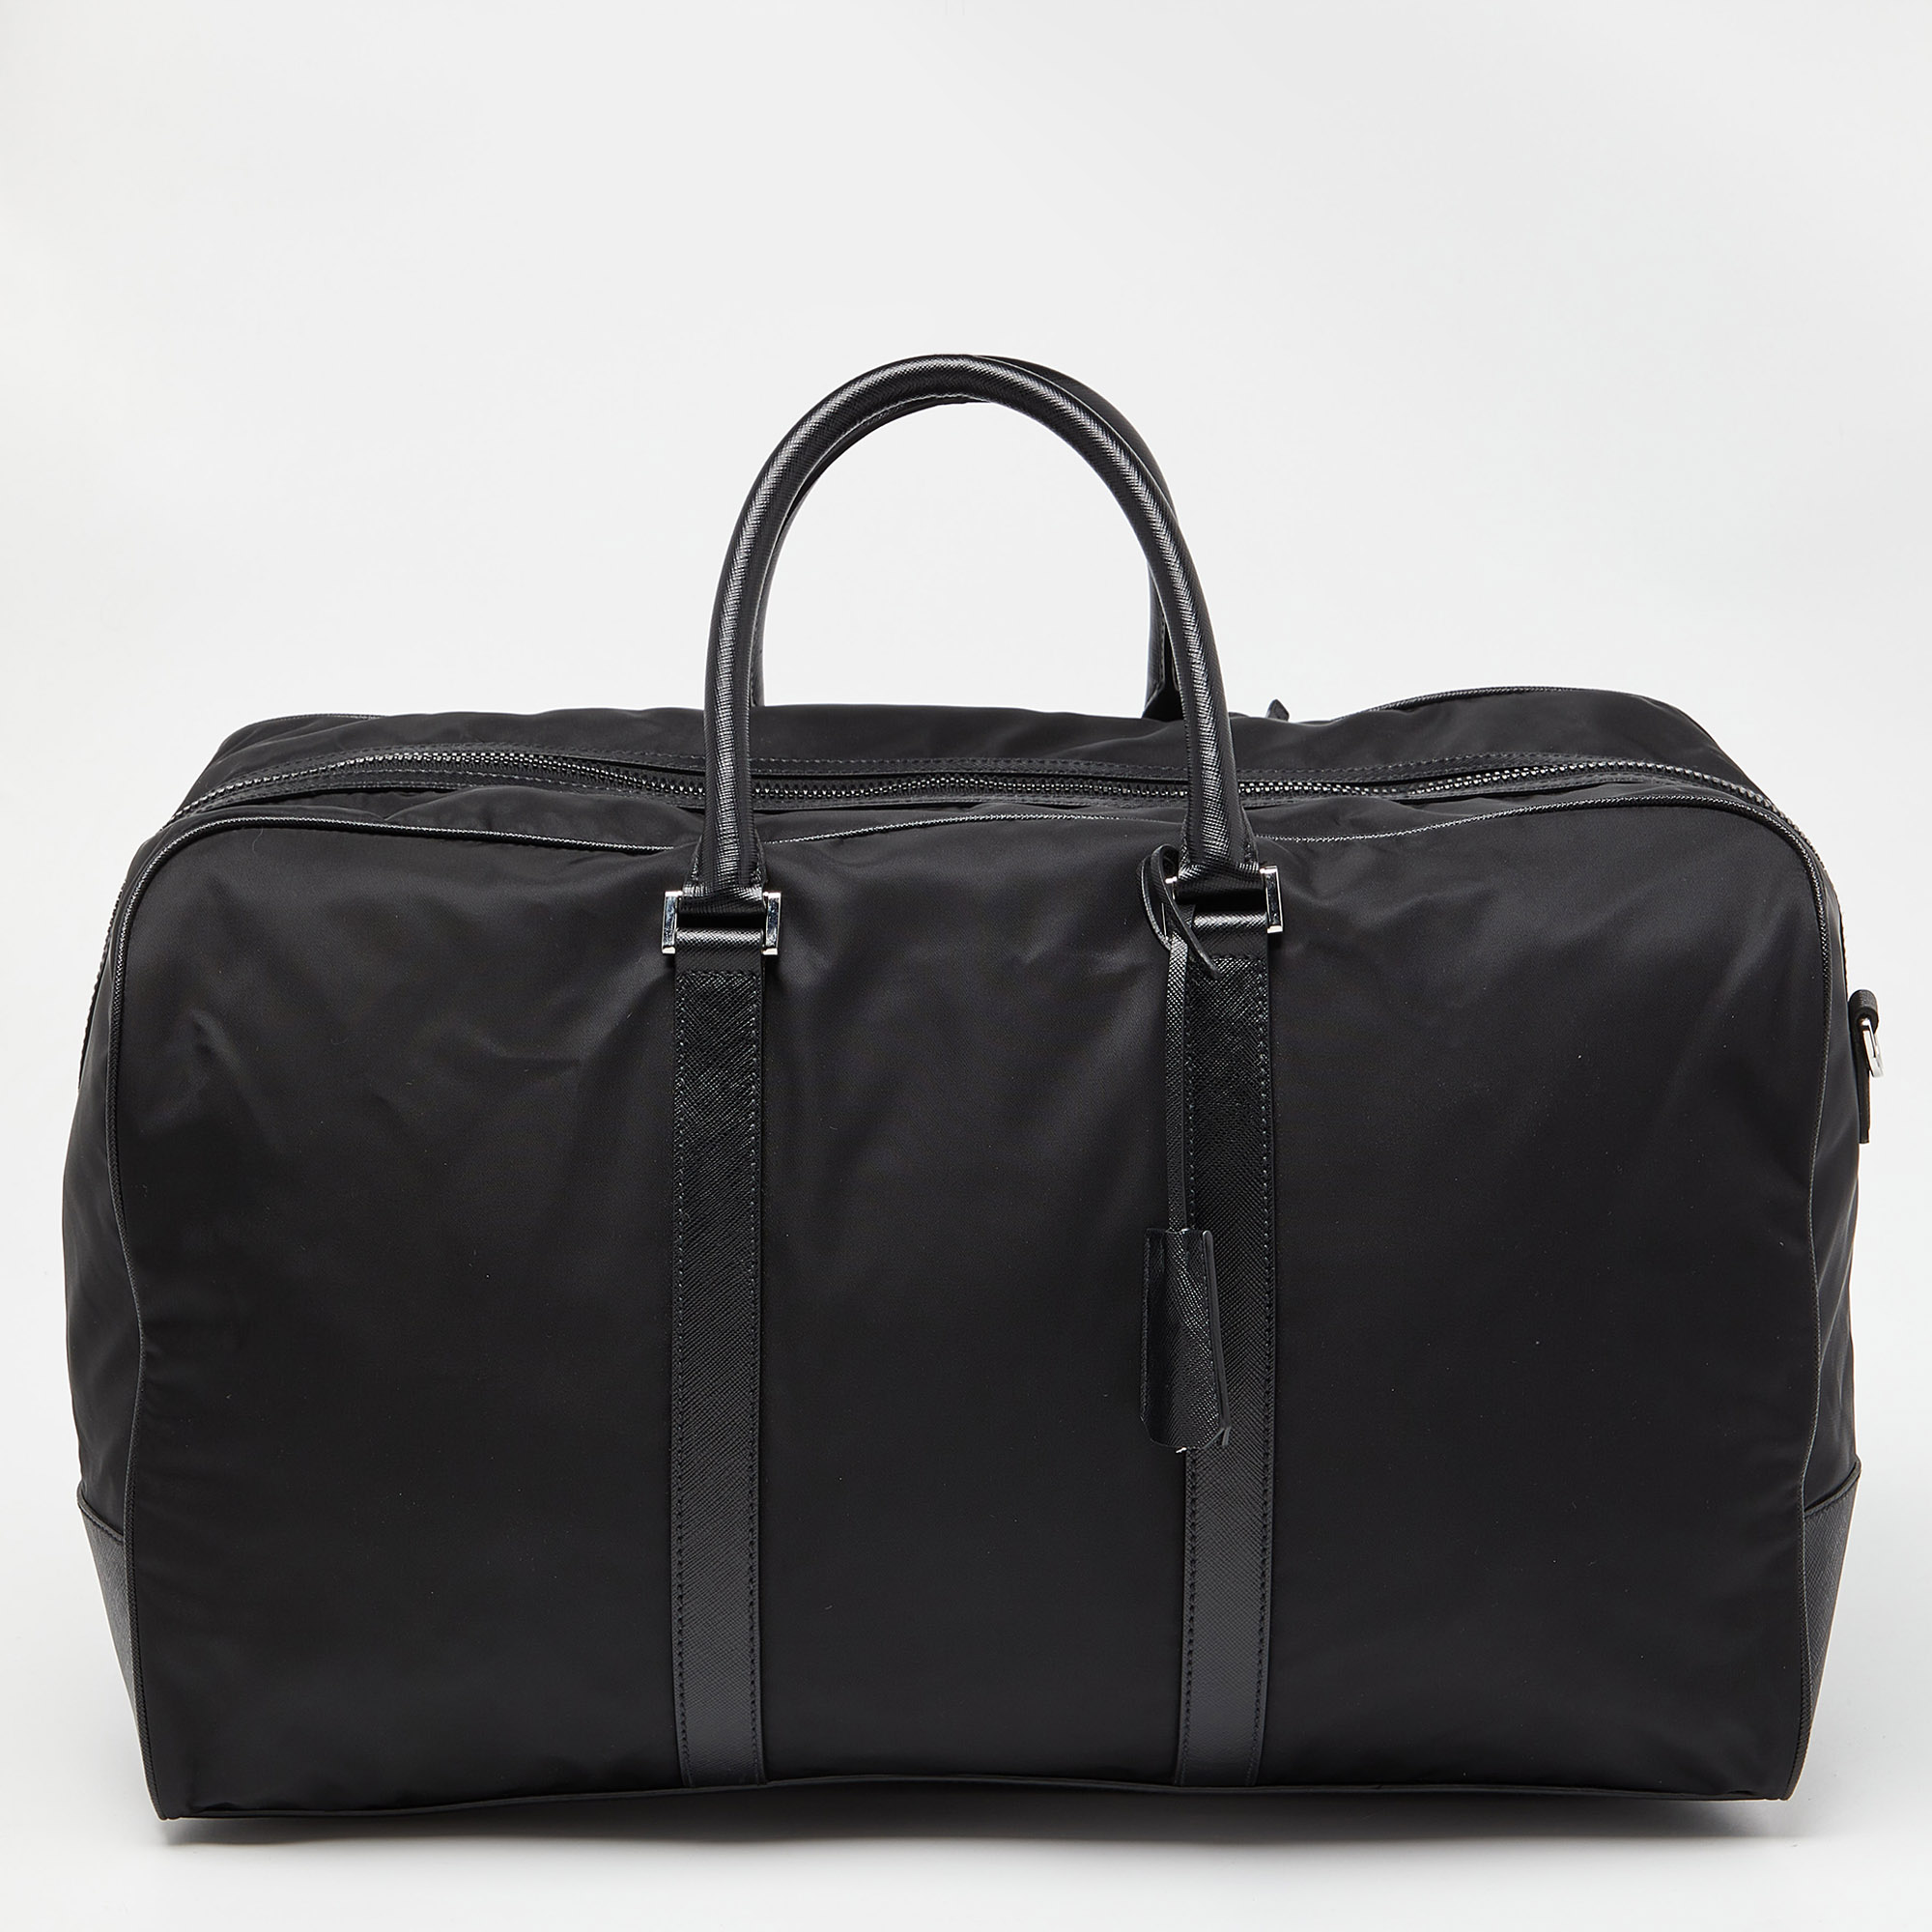 Prada Black Nylon And Leather Duffle Bag